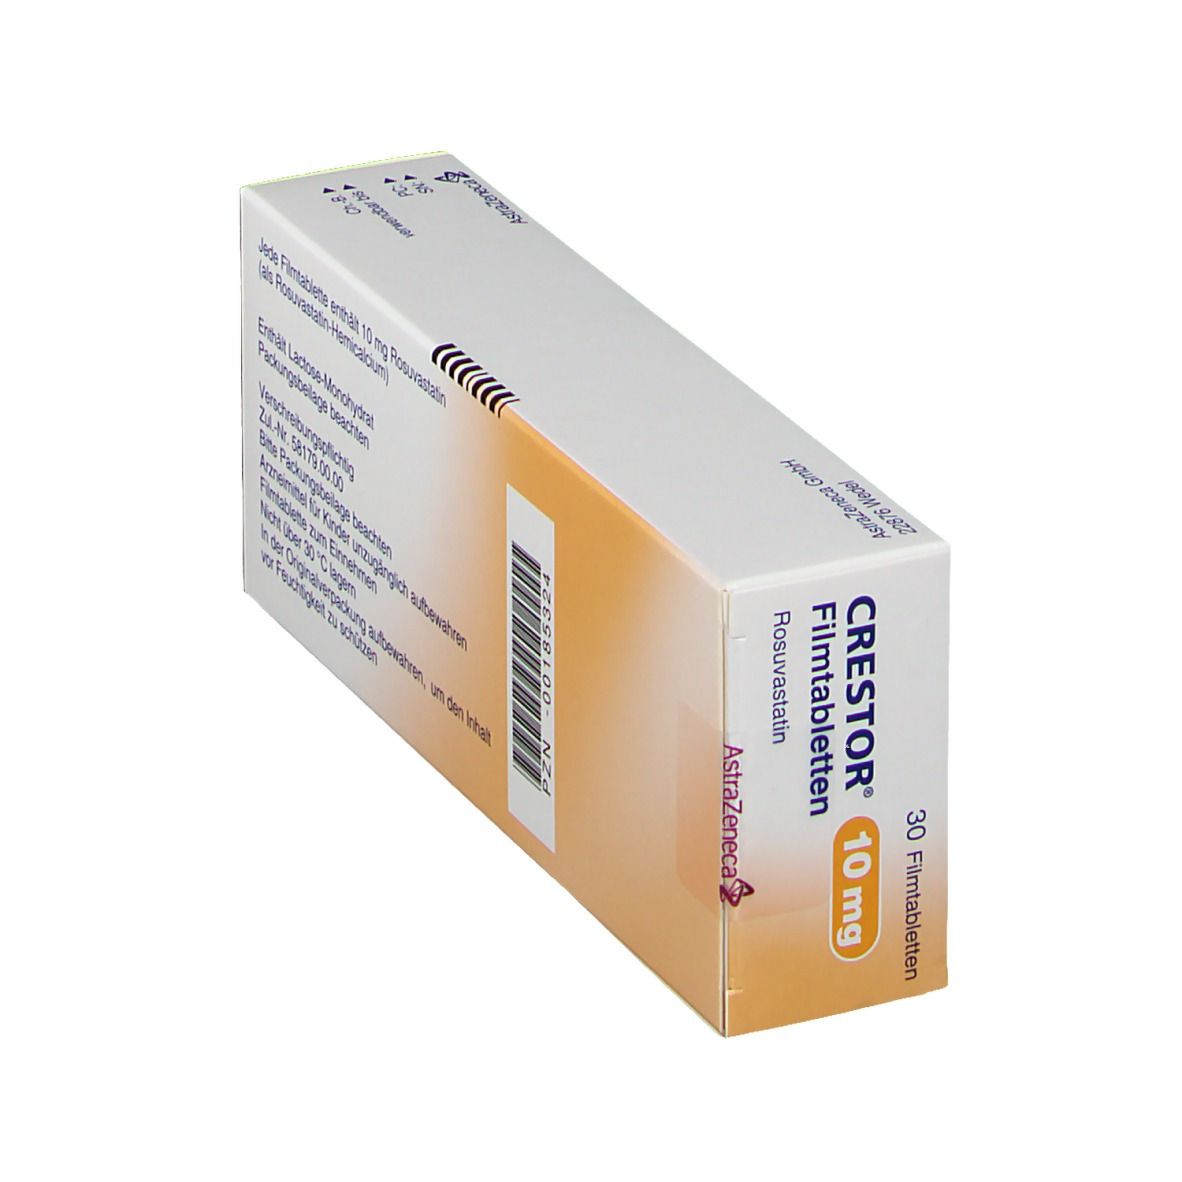 Crestor® 10  mg